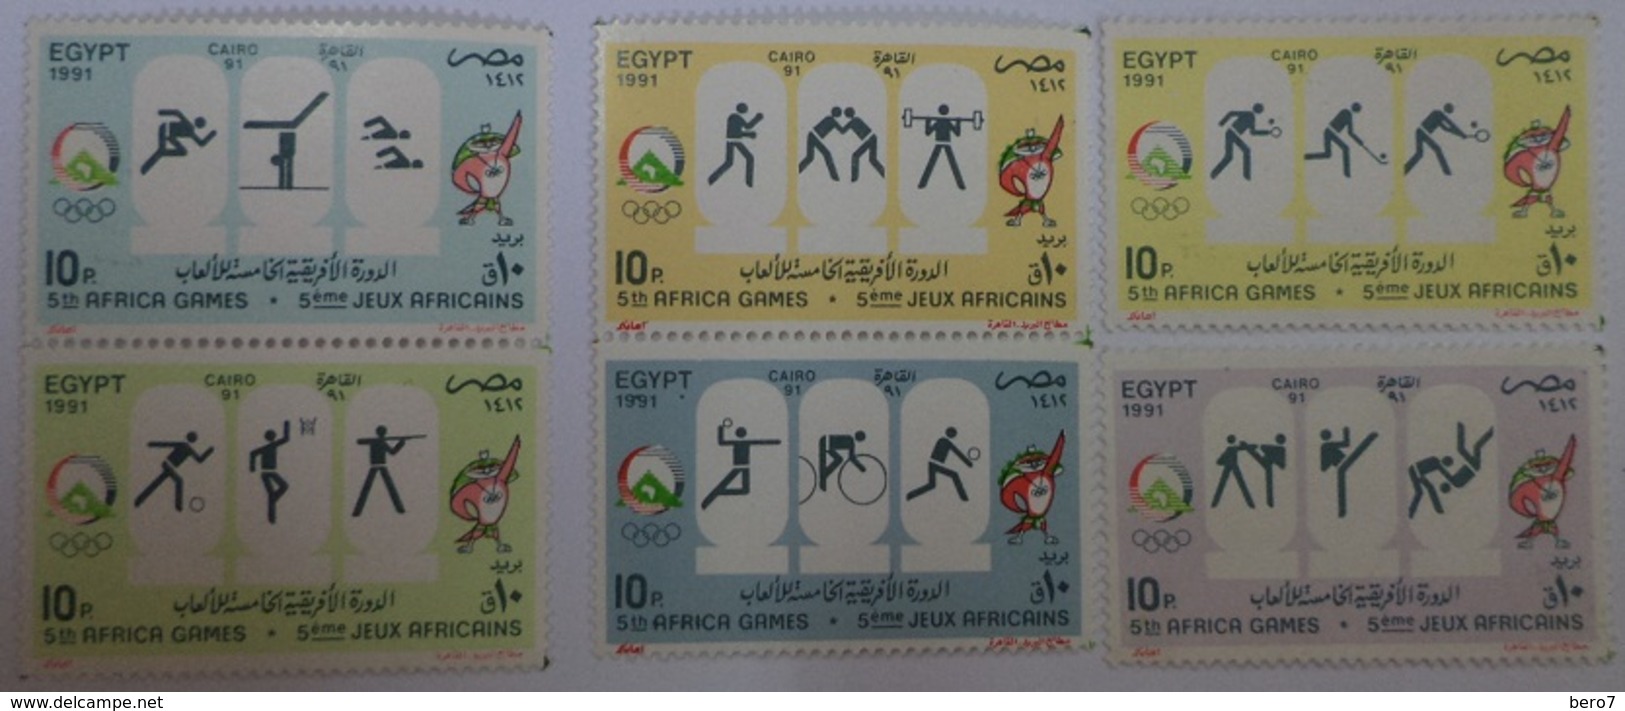 Egypt Stamp 1991 The 5th African Games, Cairo [MNH] (Egypte) (Egitto) (Ägypten) (Egipto) (Egypten - Ongebruikt